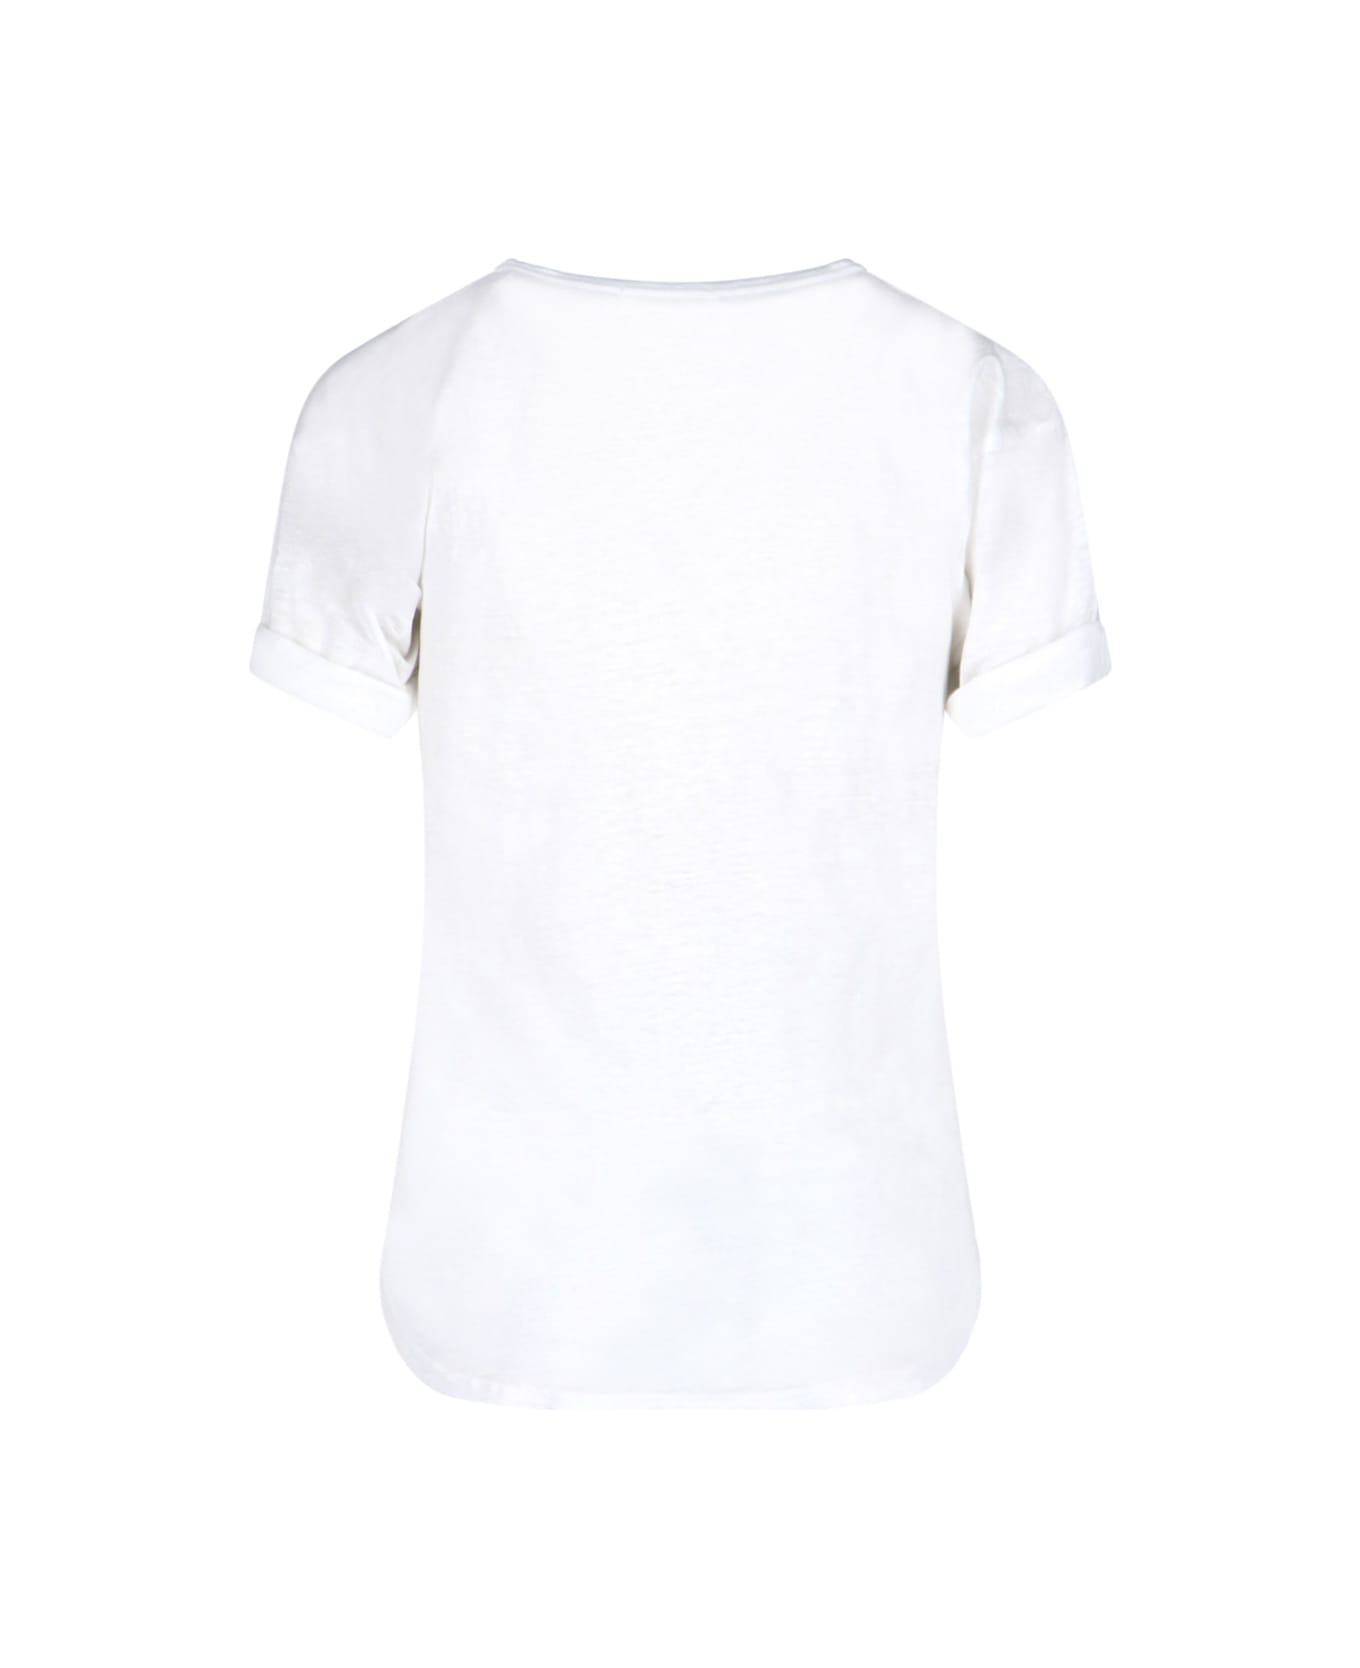 Marant Étoile Linen T-shirt - White Tシャツ